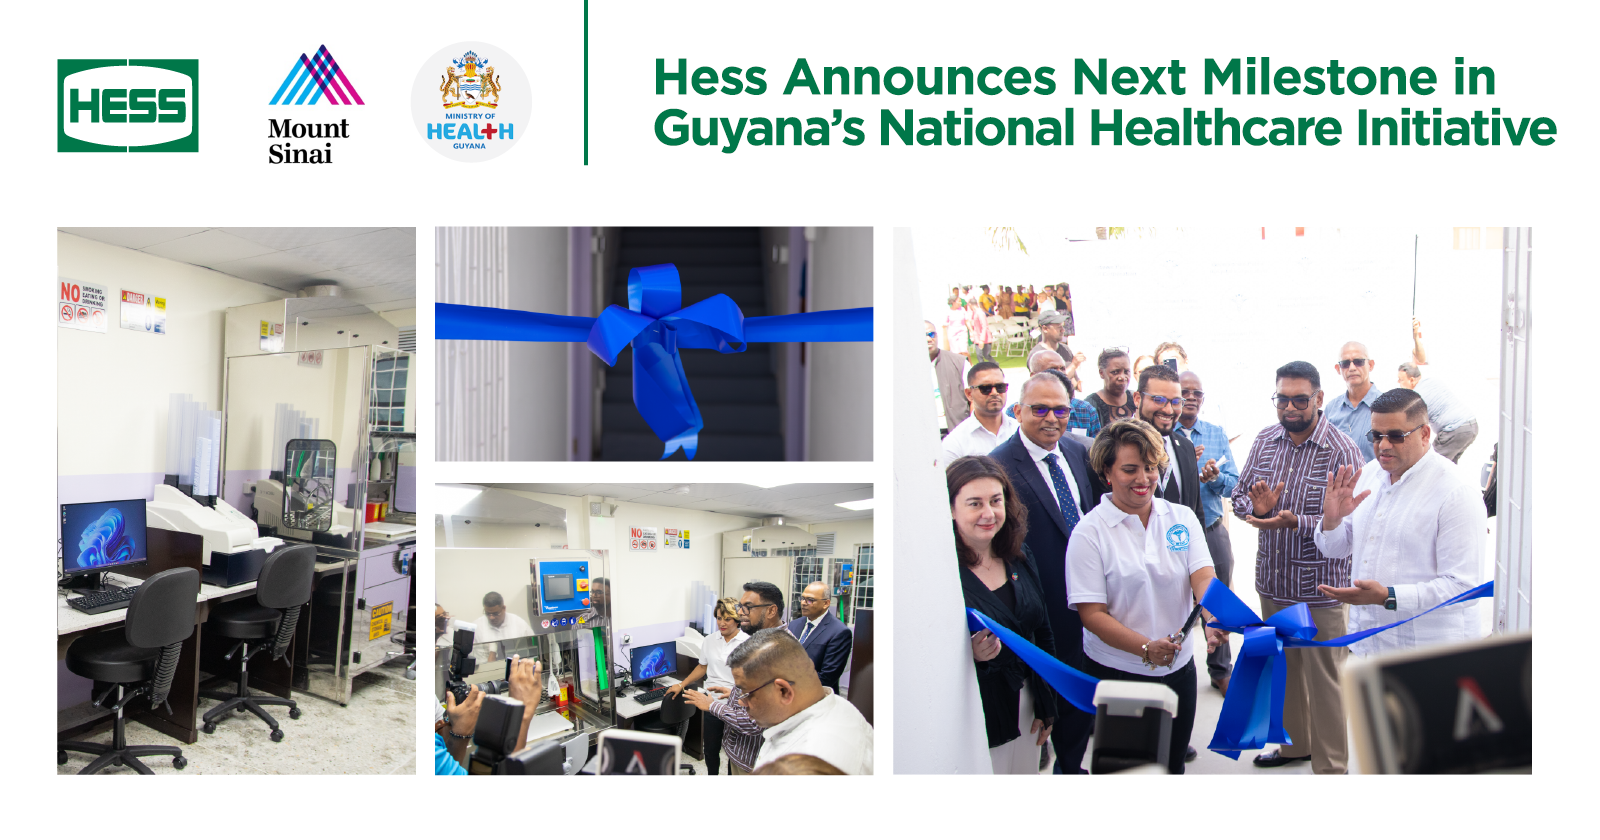 Hess Announces Next Milestone in Guyana’s National Healthcare Initiative